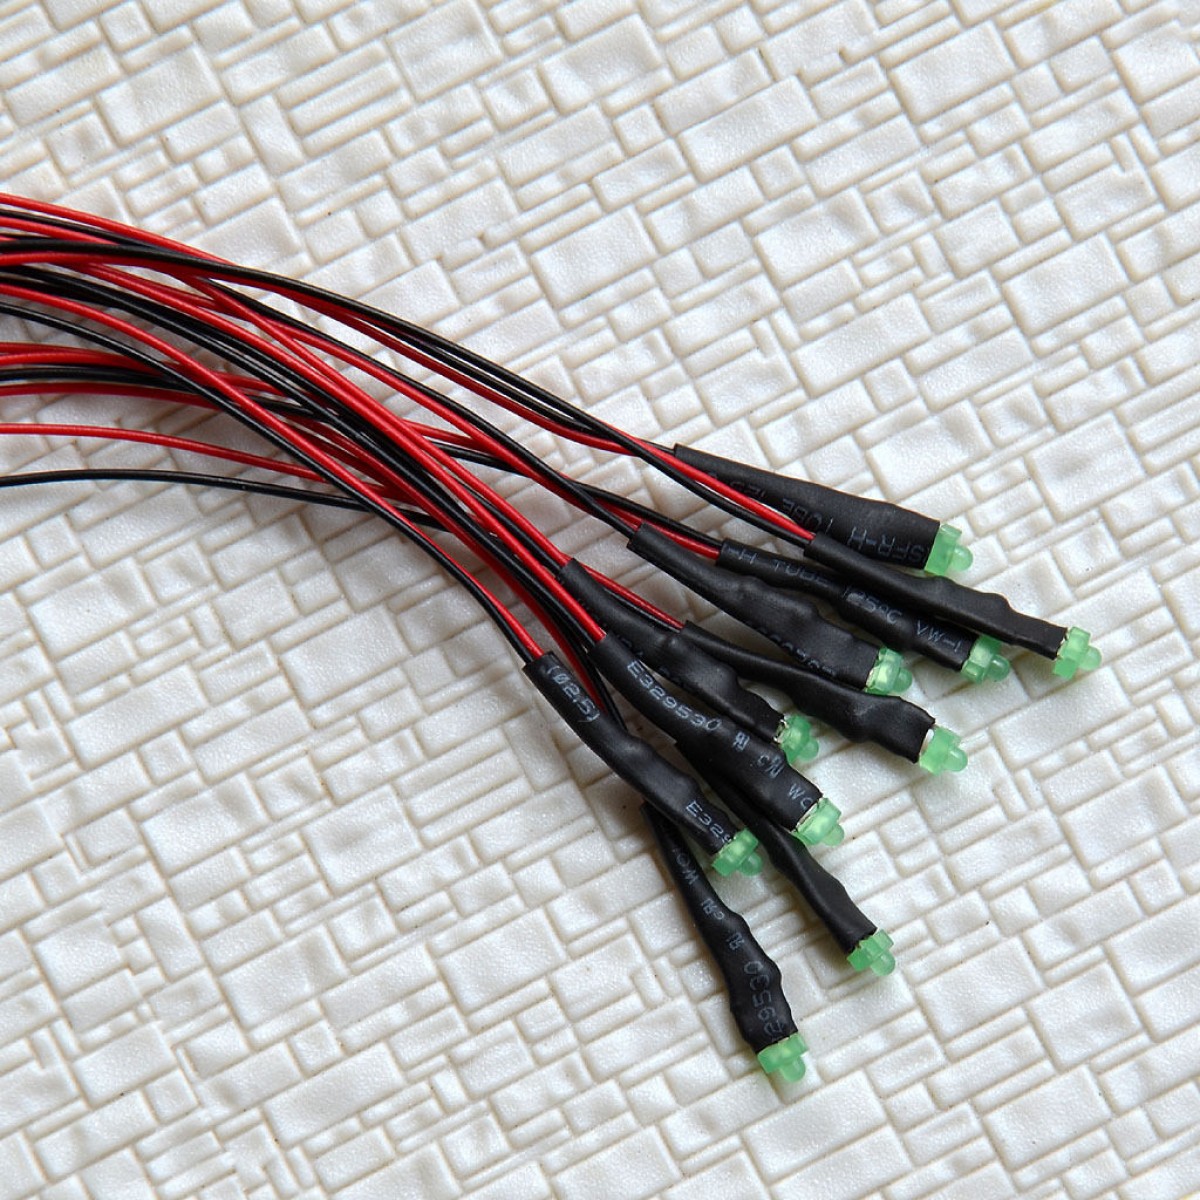 5 x Pre-Wired 1.8mm Green LEDs prewired resistor for 12V - 18V DC use